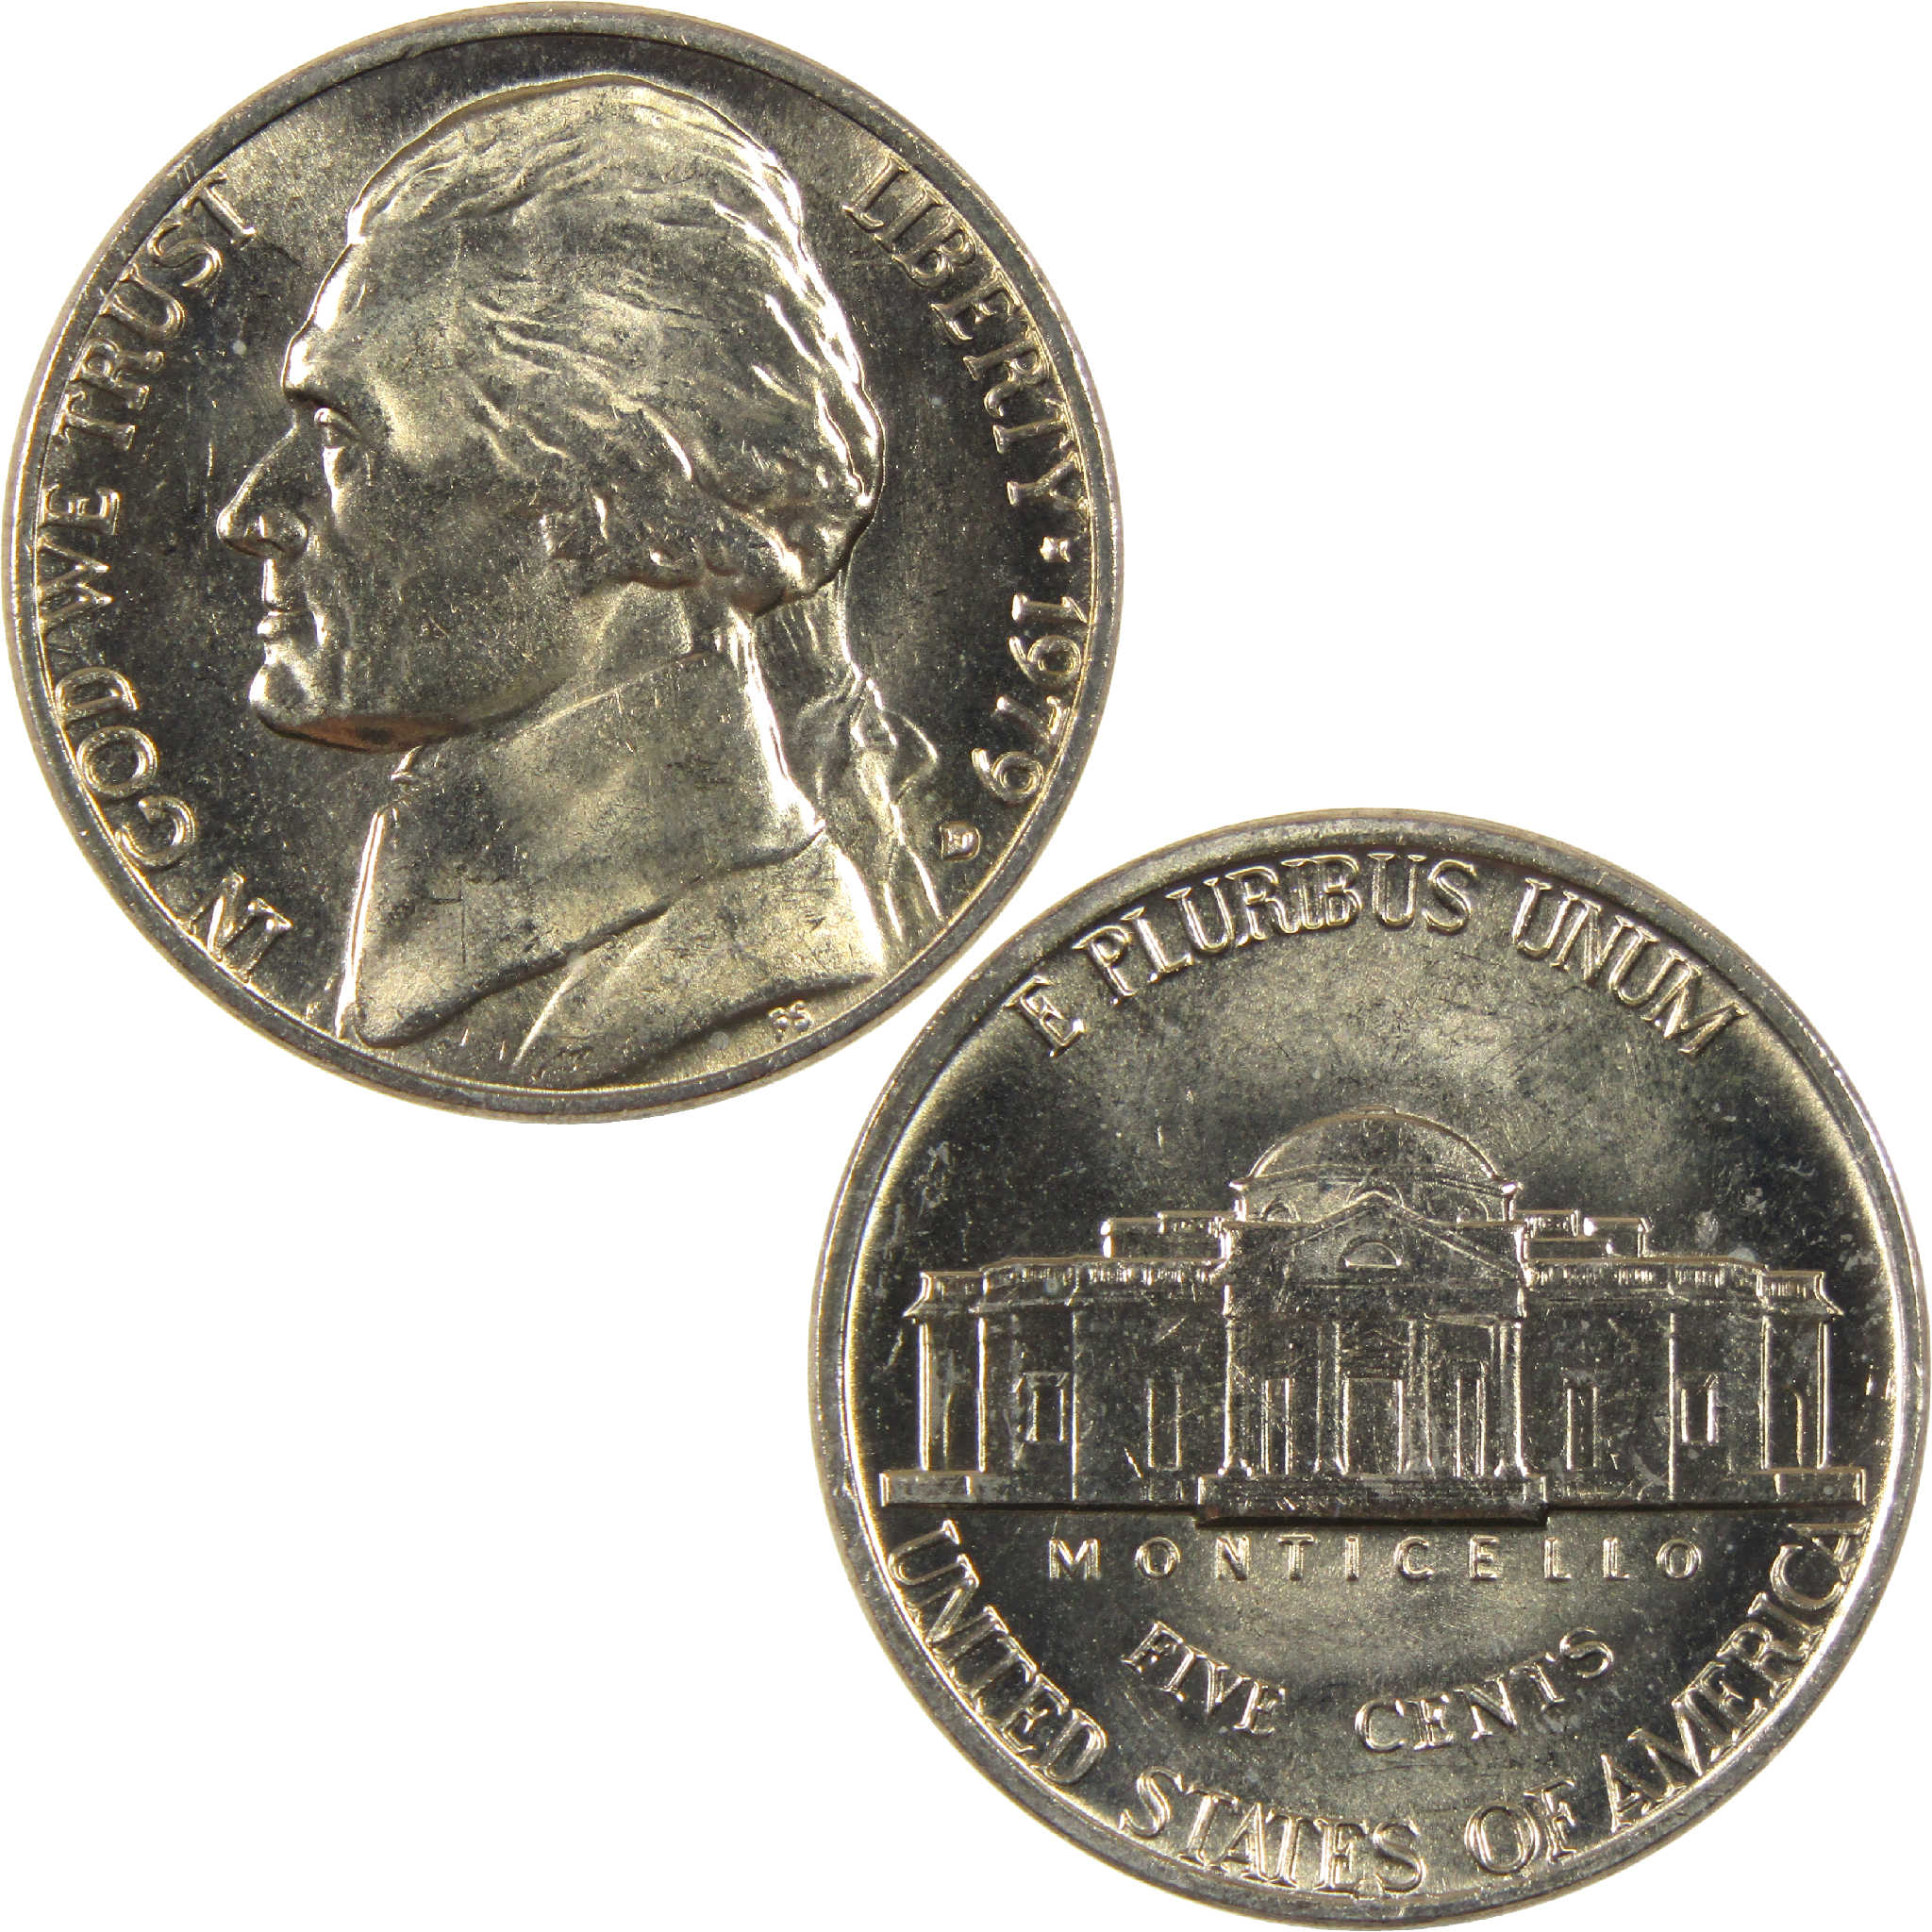 1979 D Jefferson Nickel BU Uncirculated 5c Coin